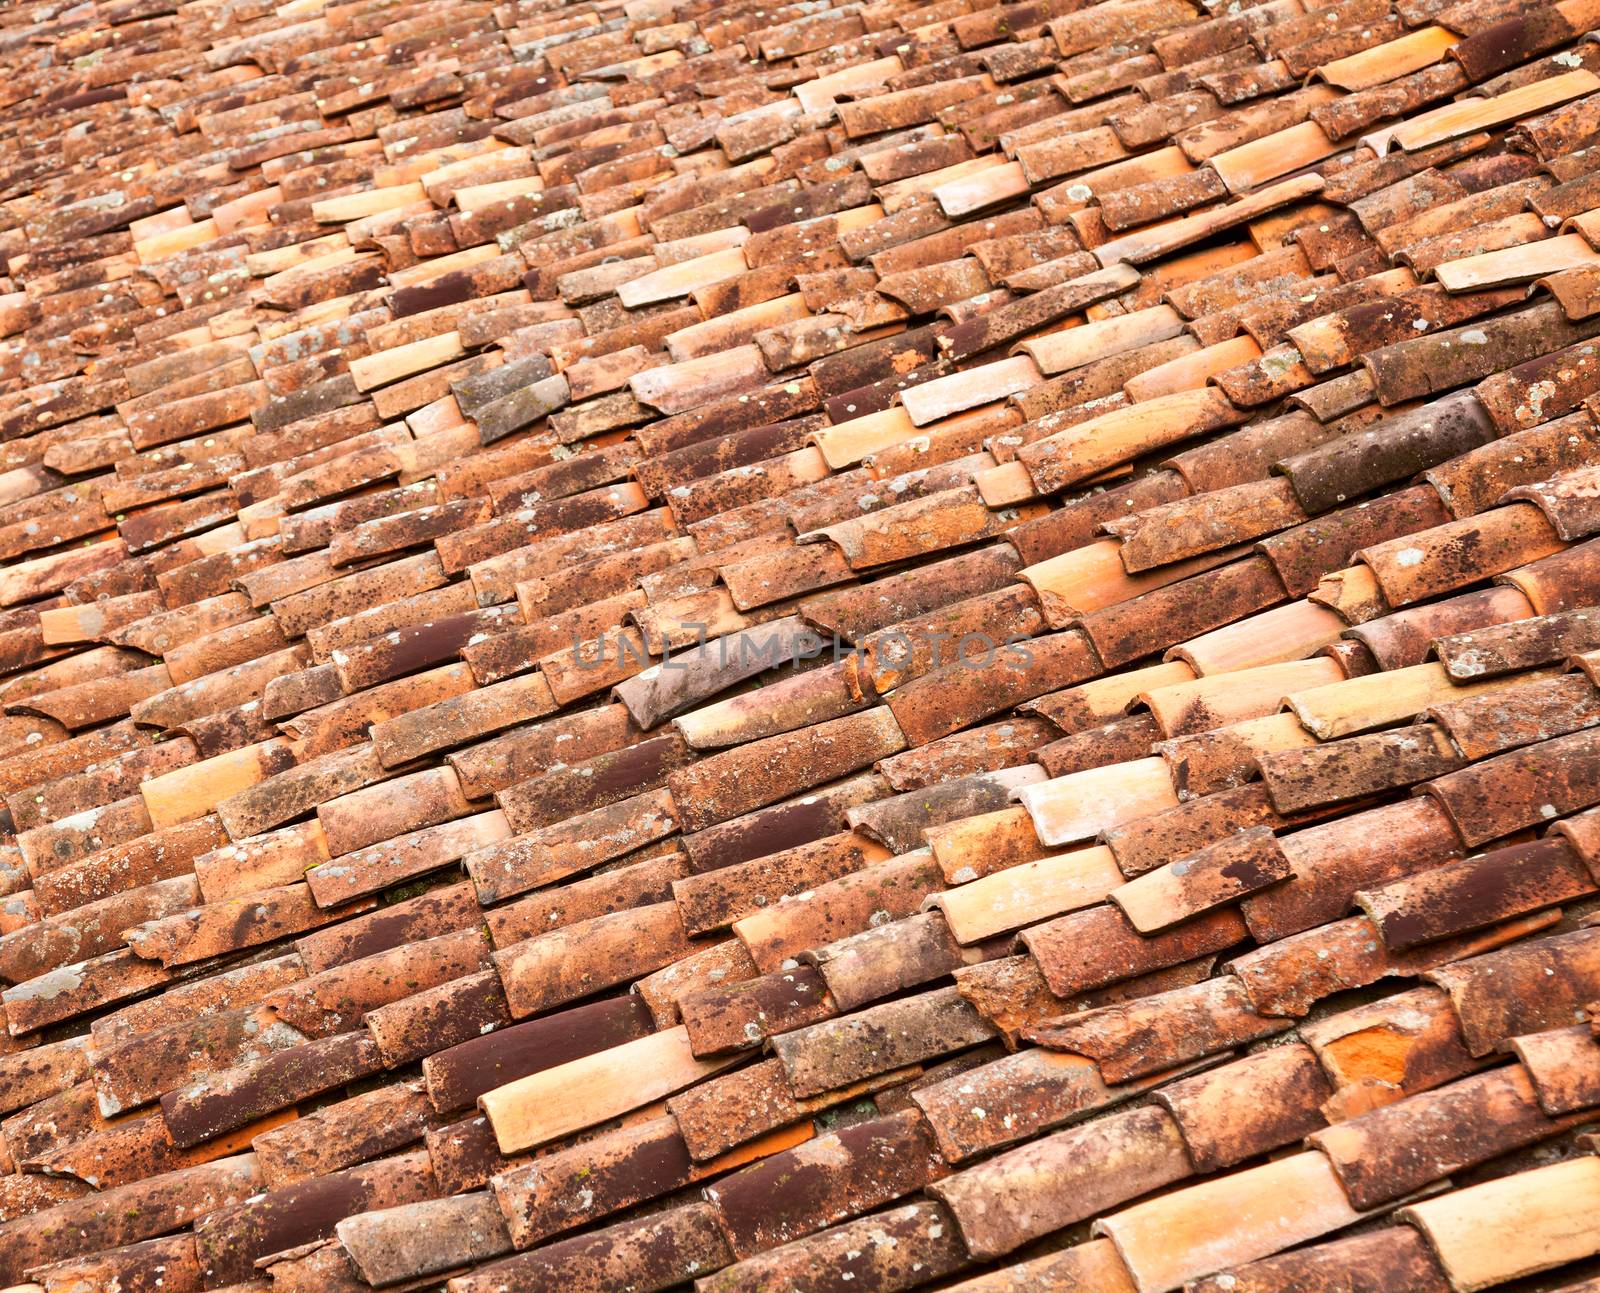 Tile roof by naumoid